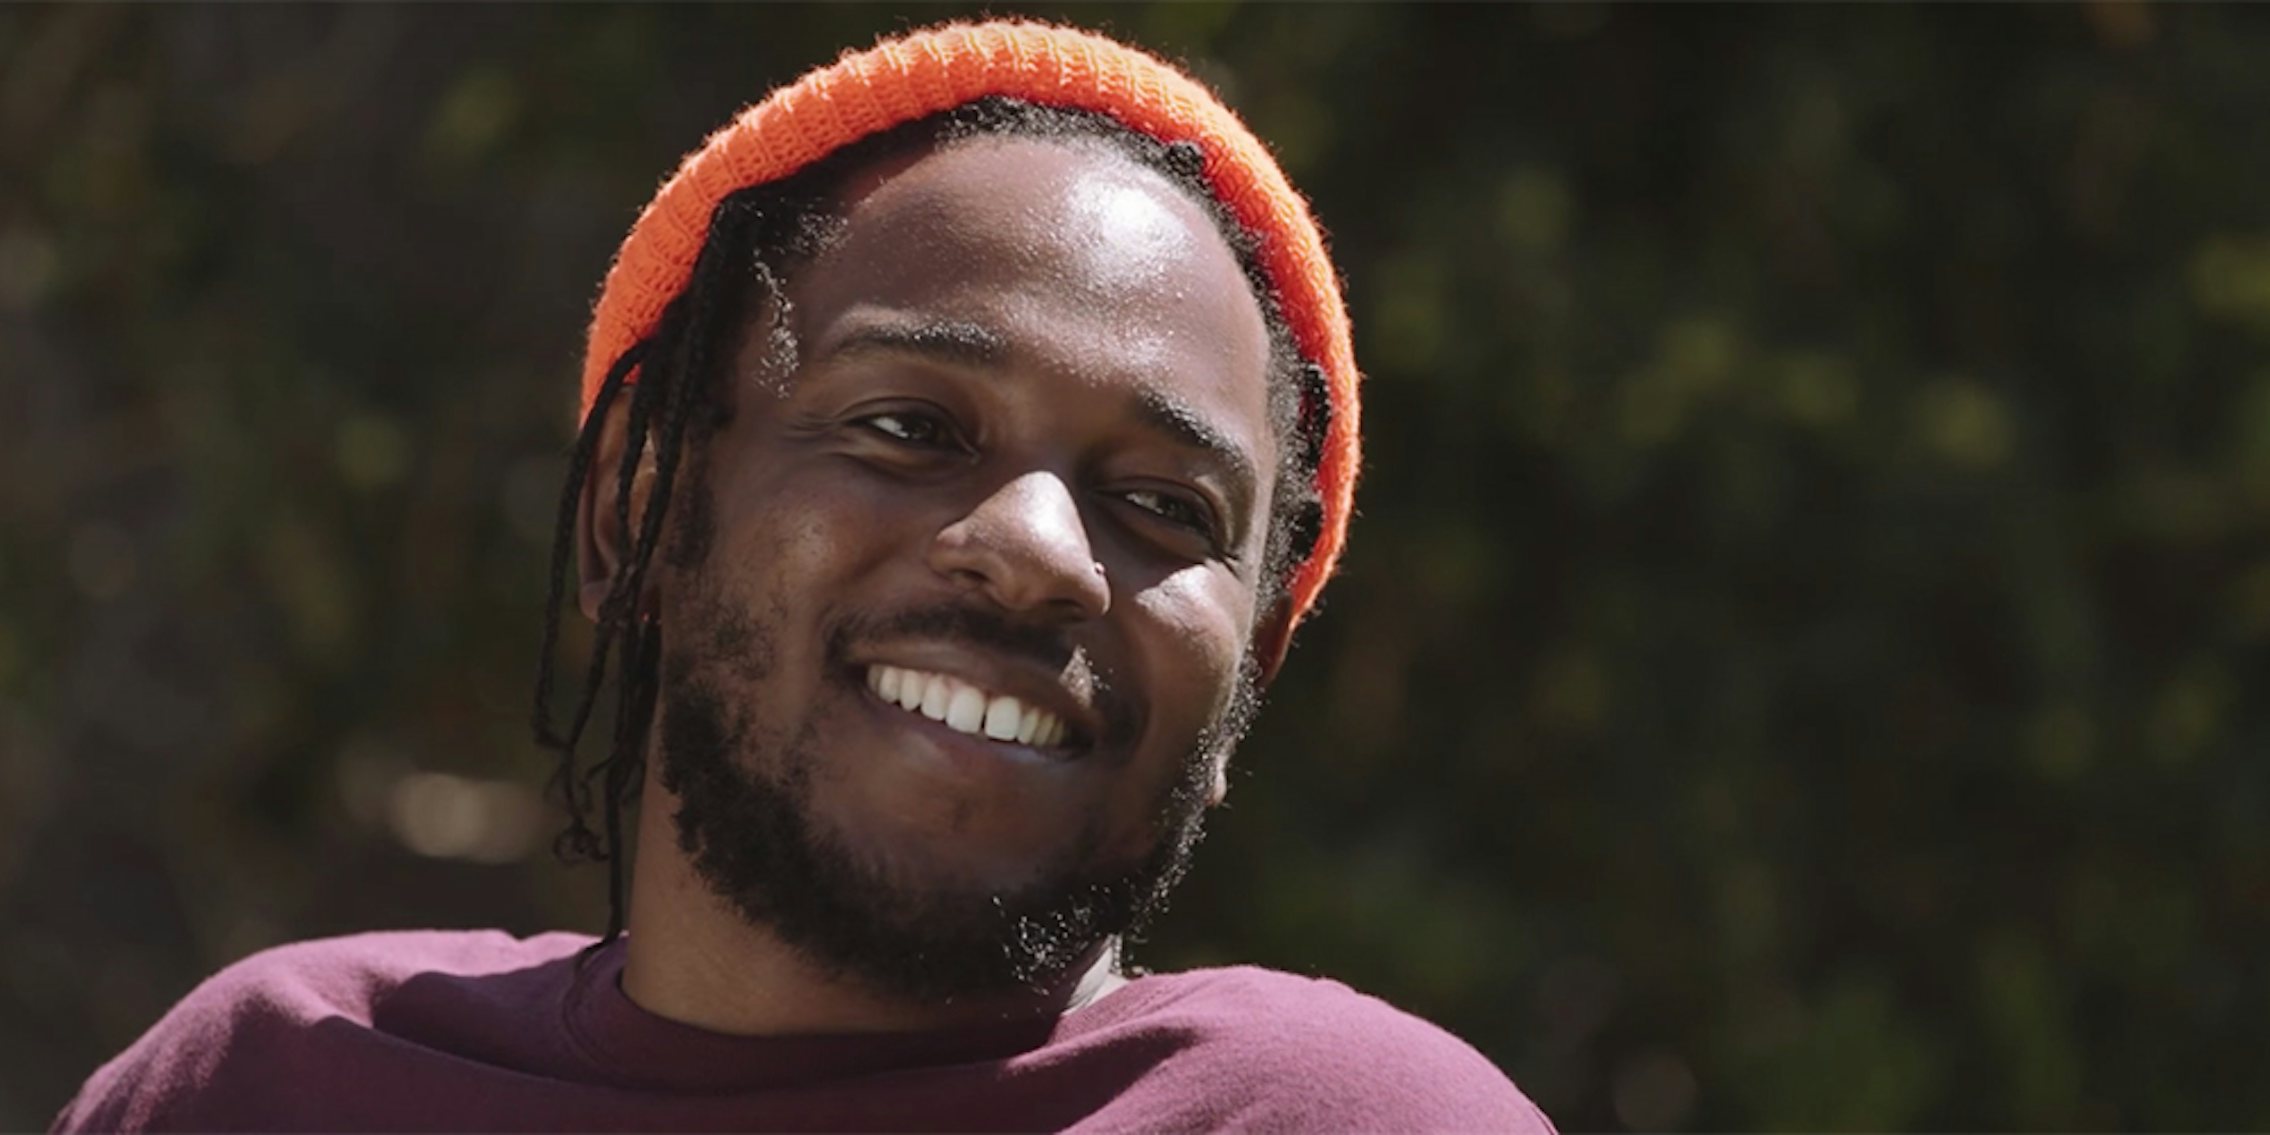 Kendrick Lamar won the Pulitzer Prize in music for his album 'DAMN.'